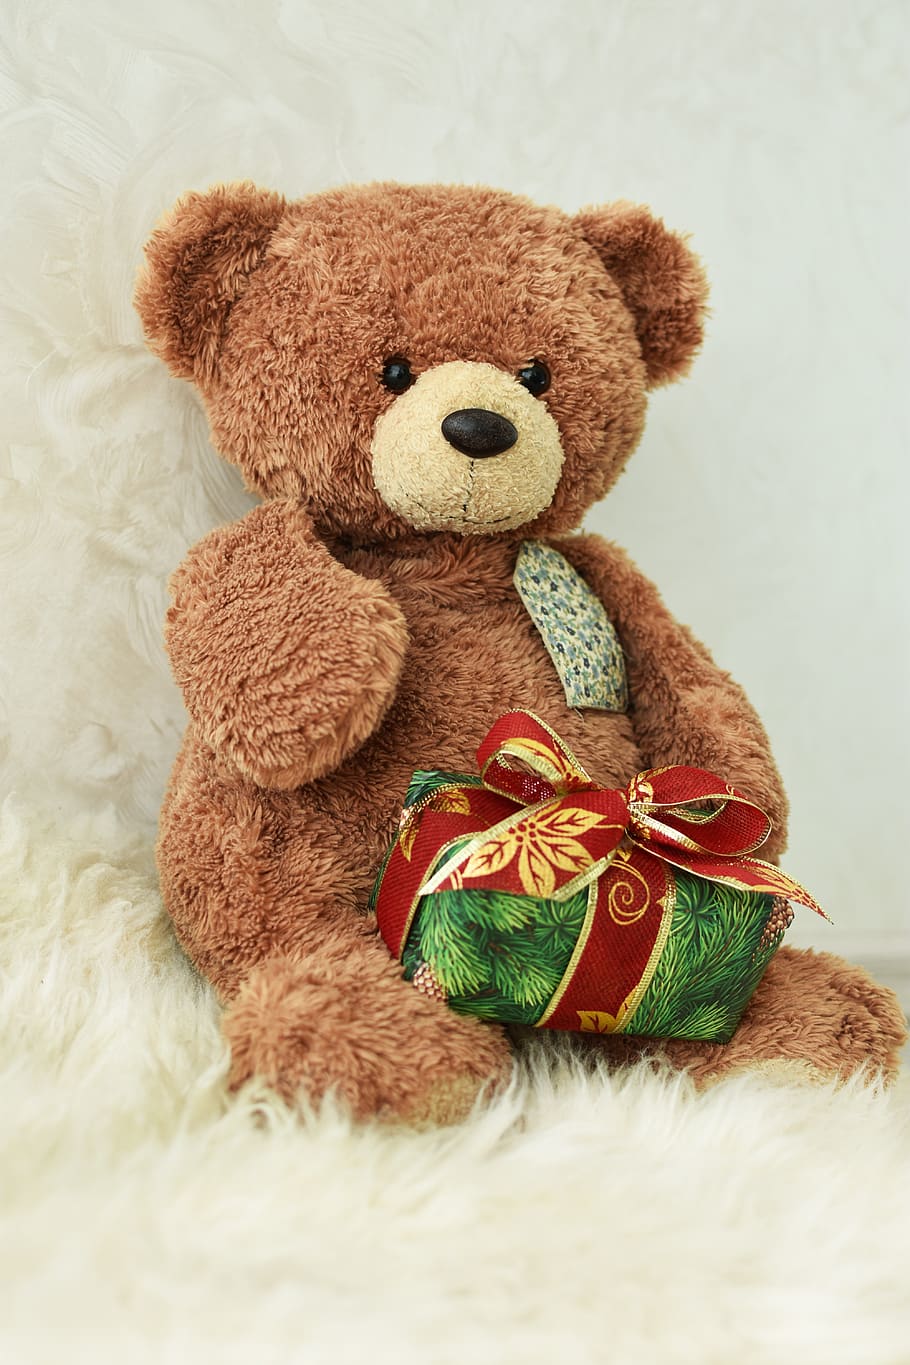 toy, bear, christmas, gift, plush, celebration, holiday, stuffed toy, teddy bear, indoors